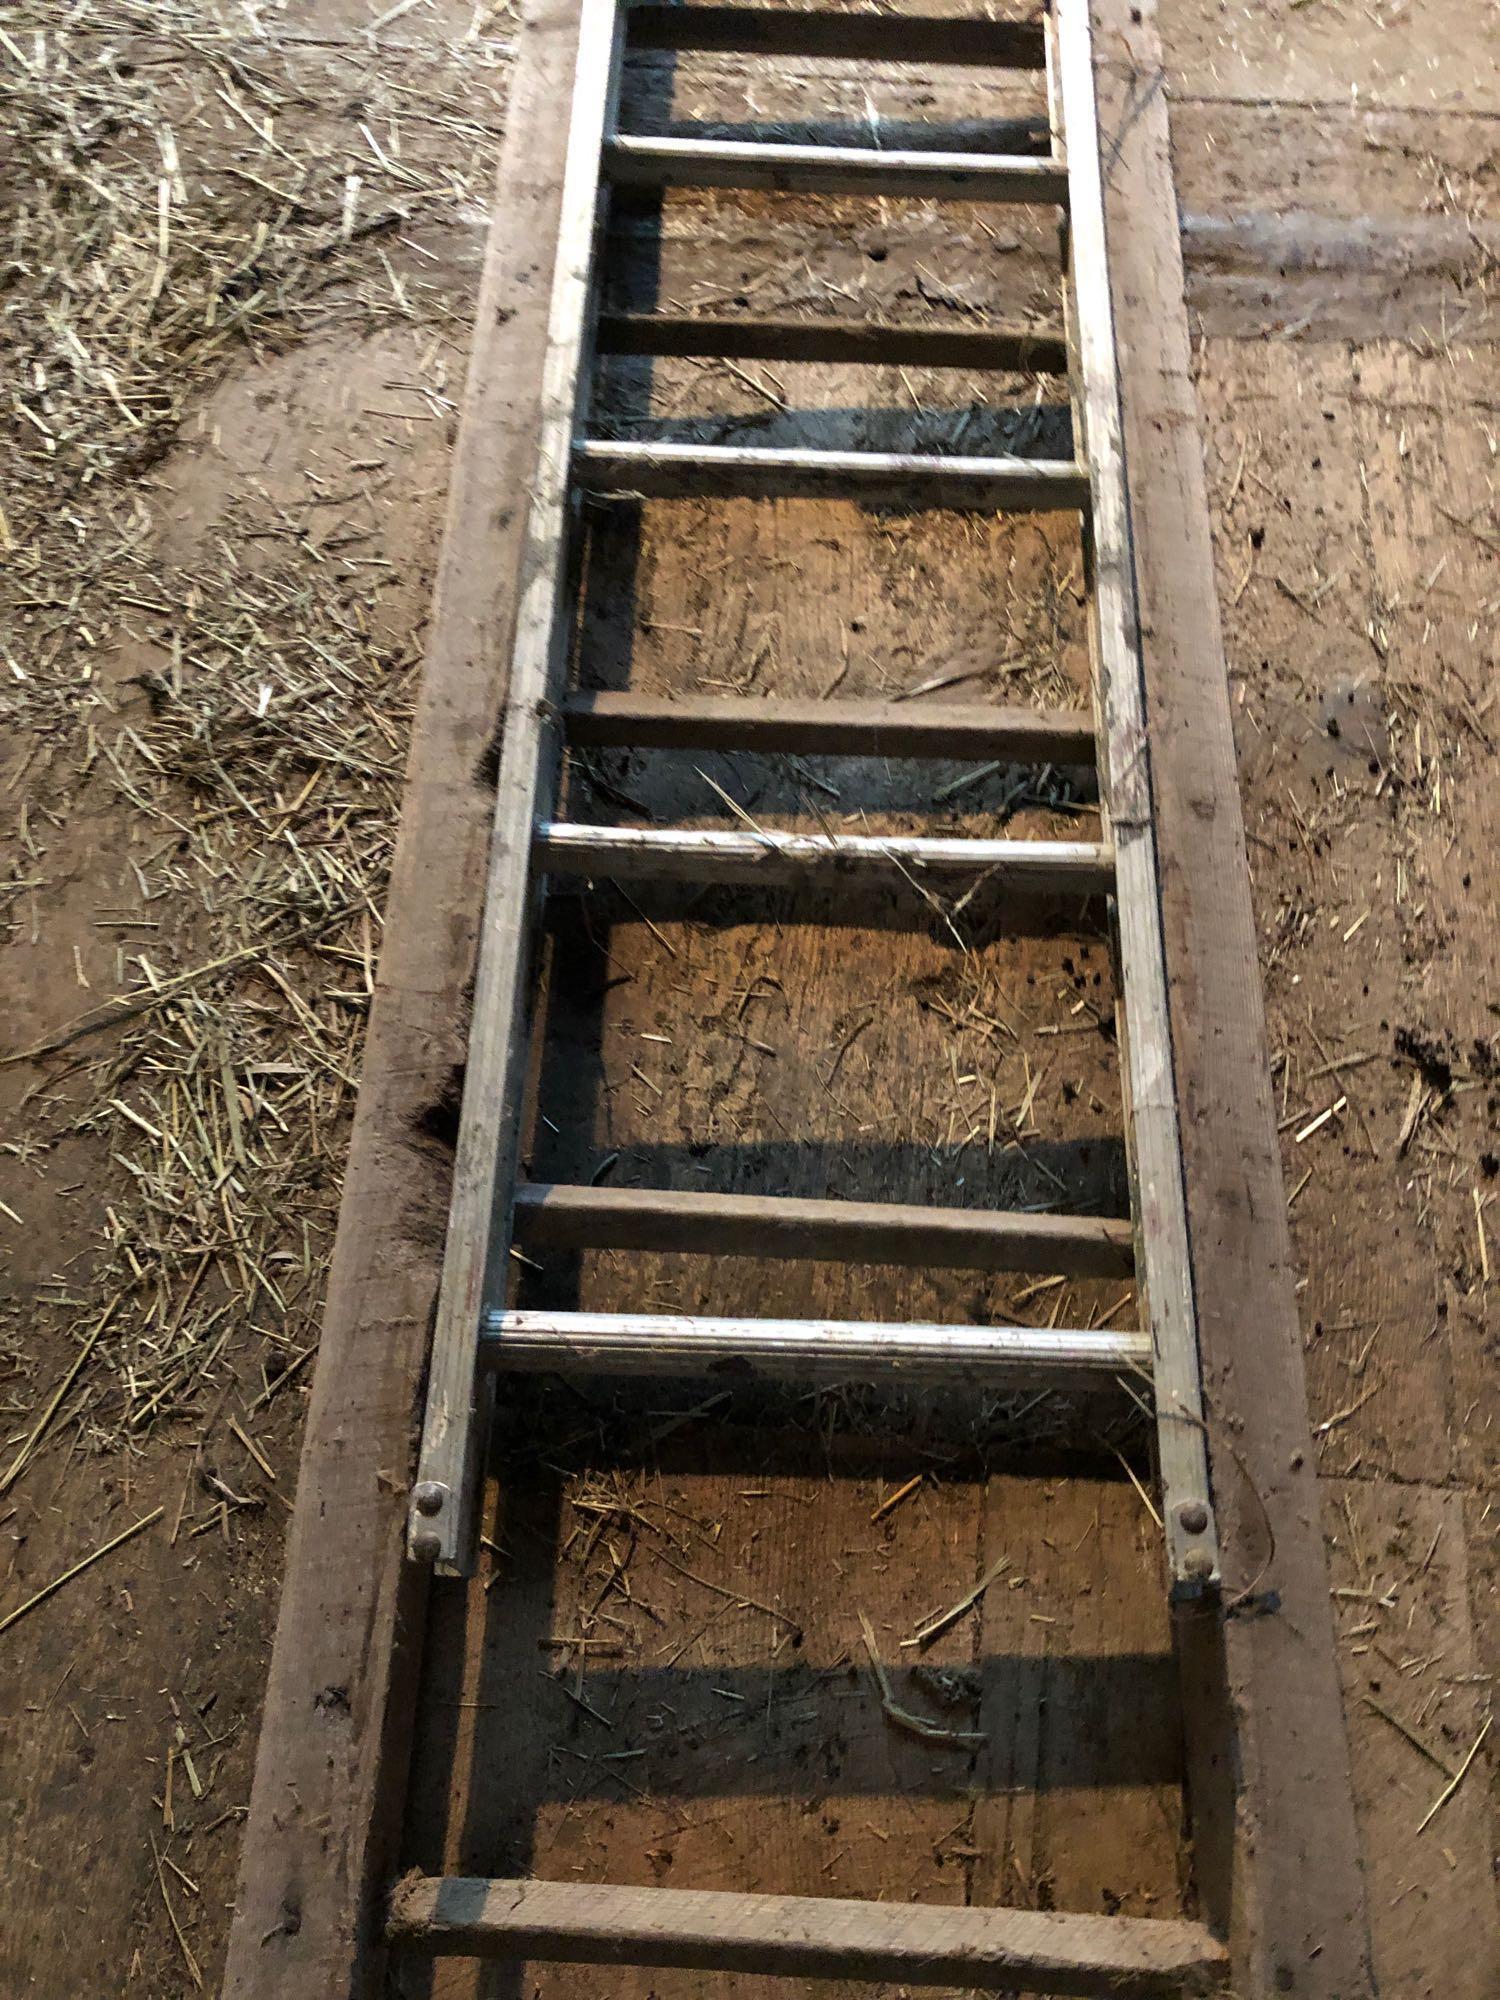 25 foot heavy duty wooden ladder, 12 foot aluminum ladder